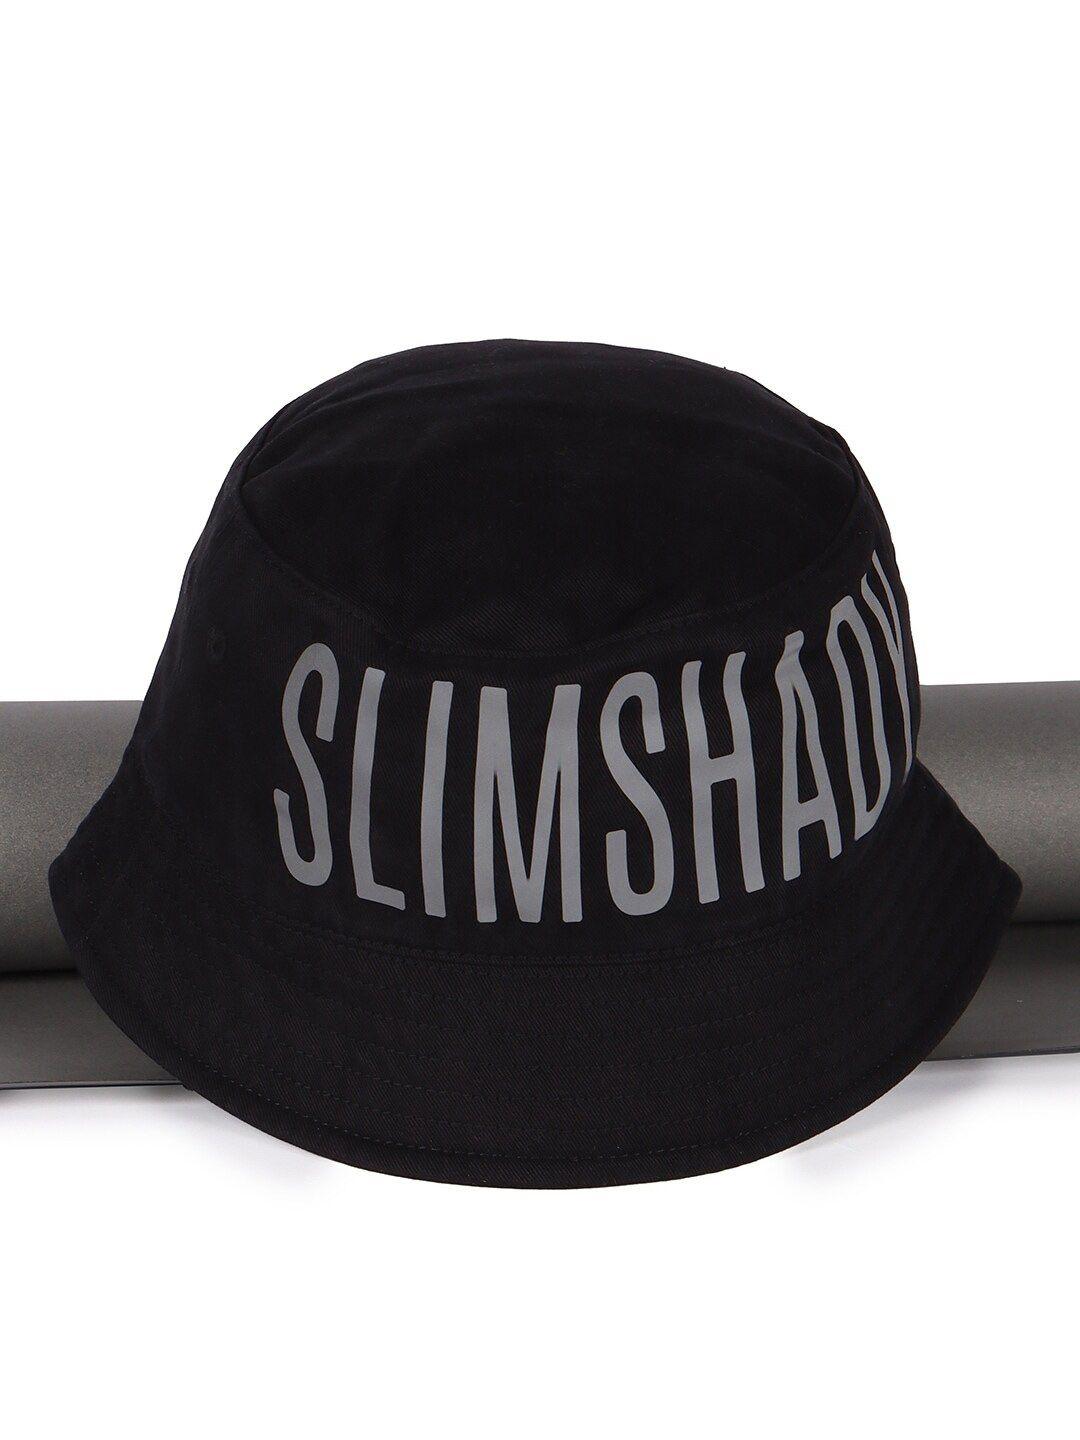 bewakoof unisex slim shady printed cotton sun hat